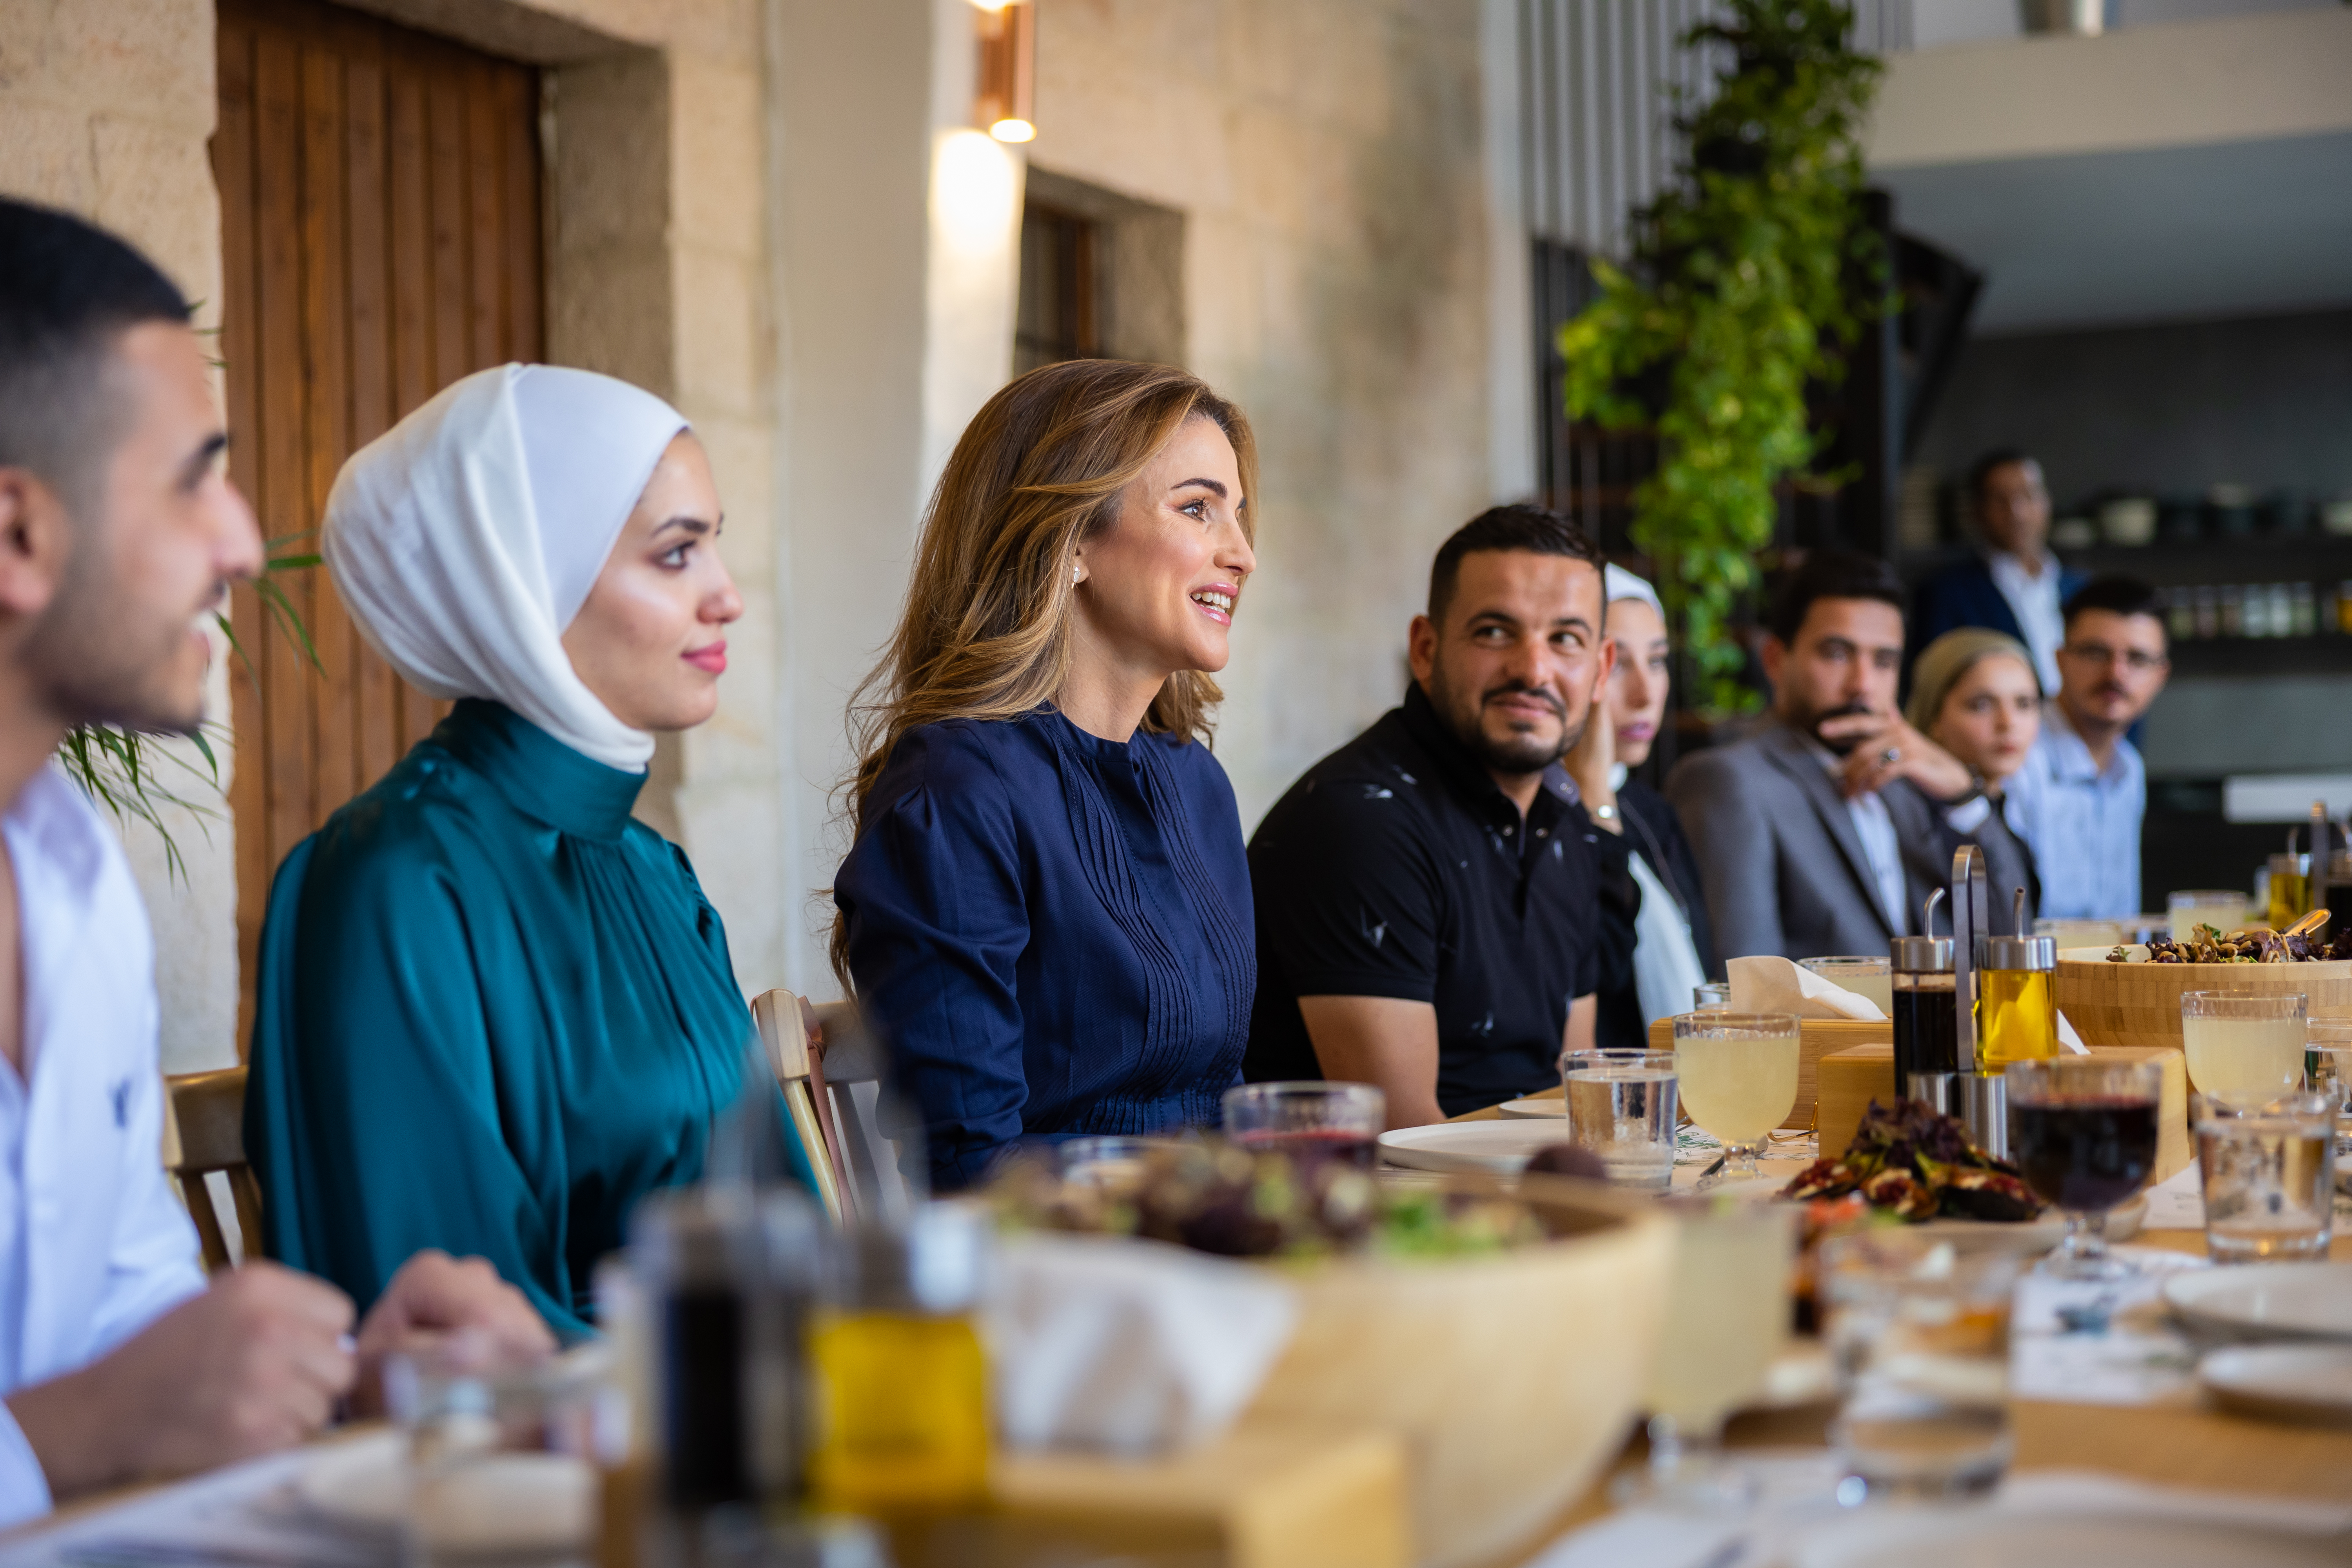 Queen Rania wore sachin and babi dress to visit Madaba